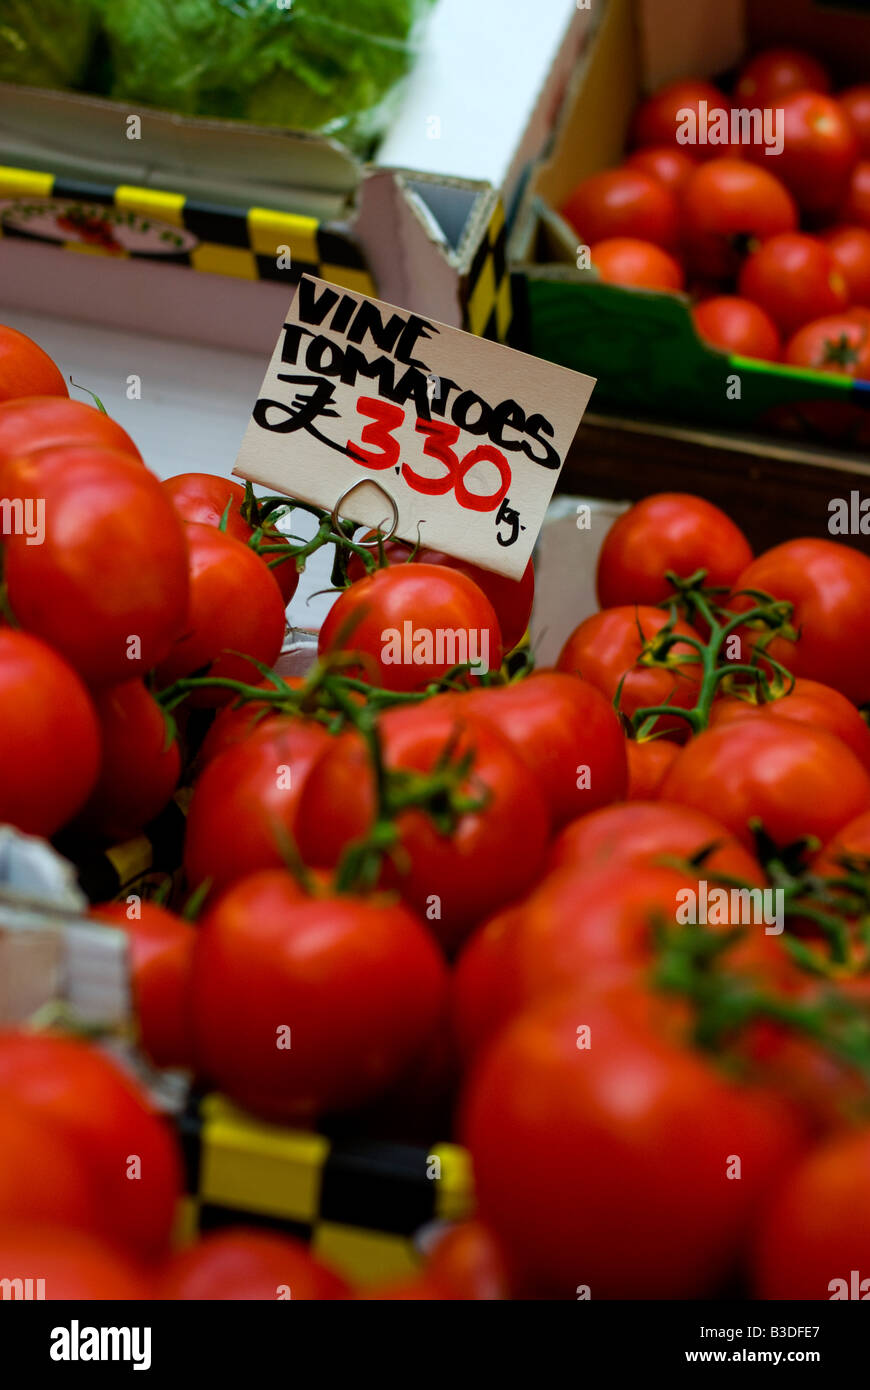 Tomato's for sale, Borough Market, London Stock Photo